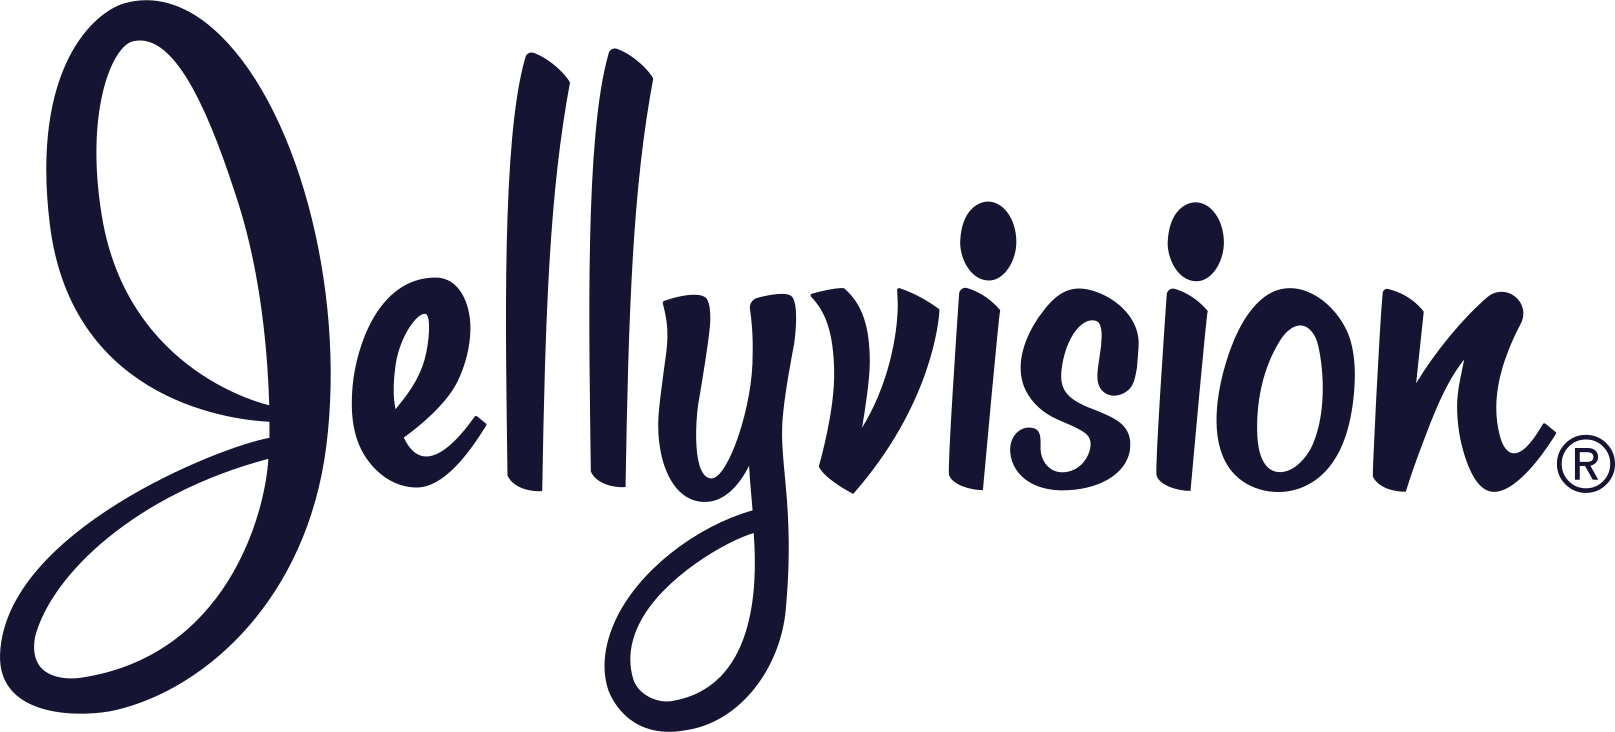 jellyvision logo indigo